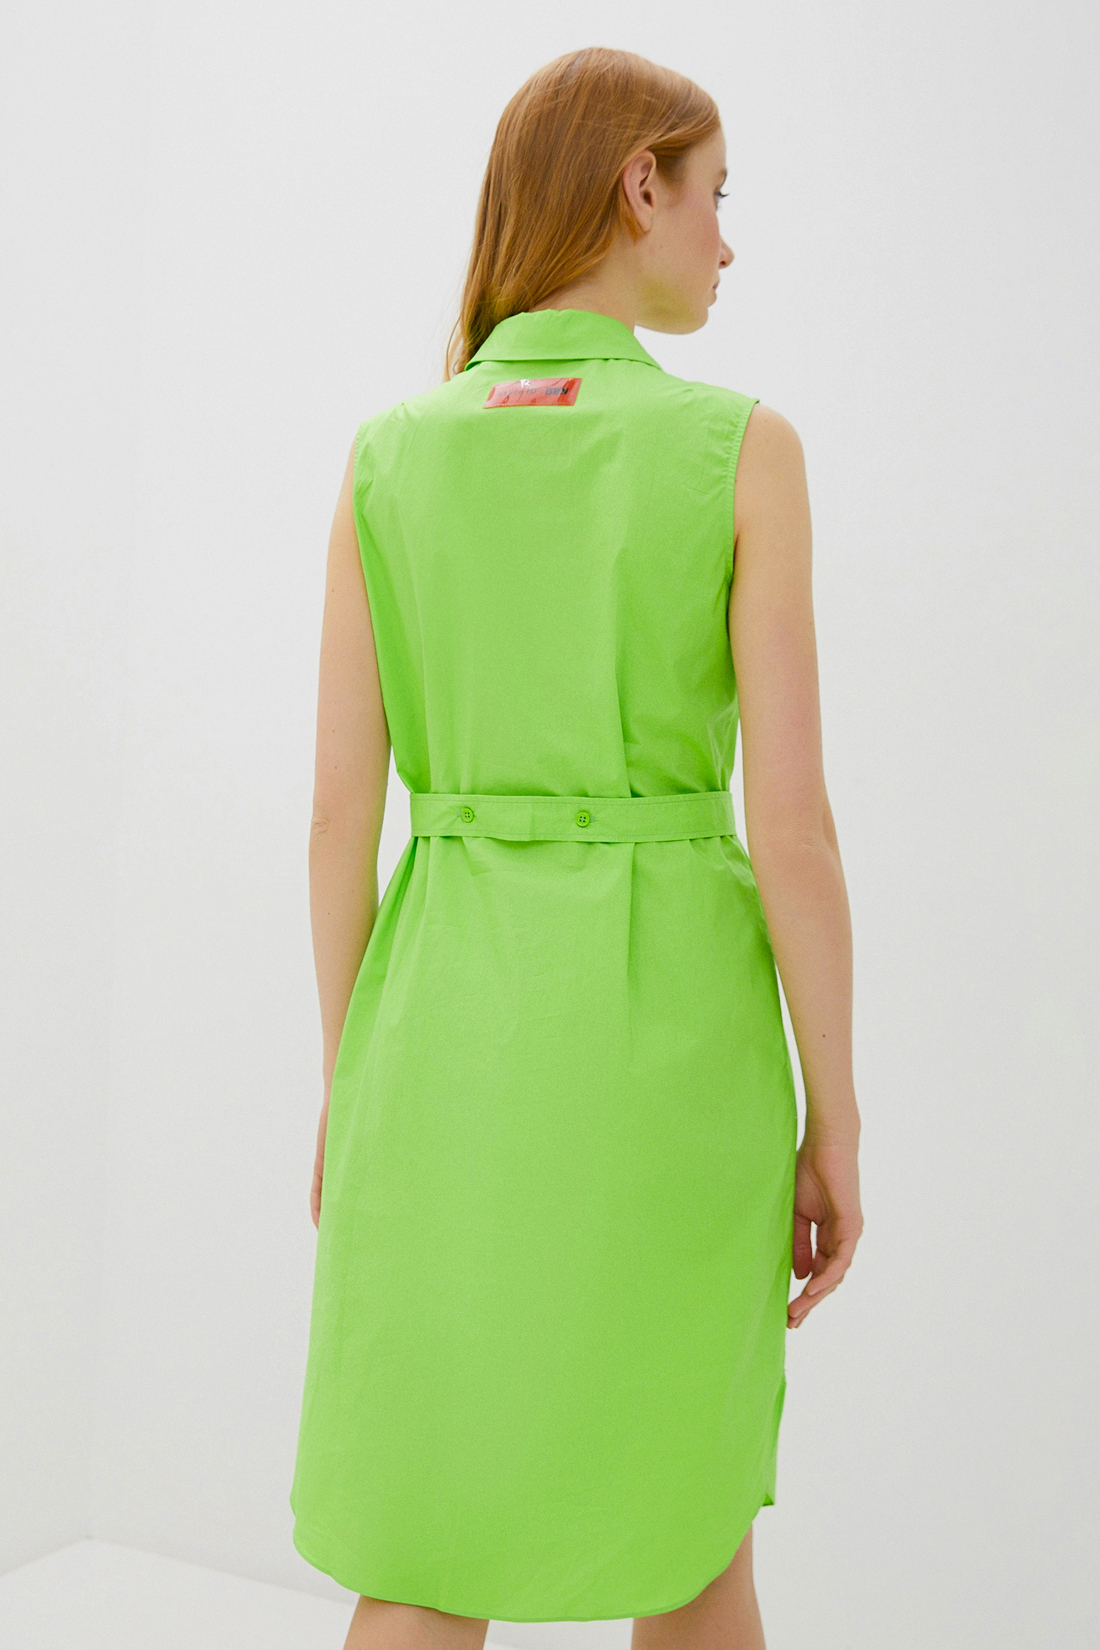 Платье-рубашка без рукавов (арт. baon B450059), размер M, цвет зеленый Платье-рубашка без рукавов (арт. baon B450059) - фото 2